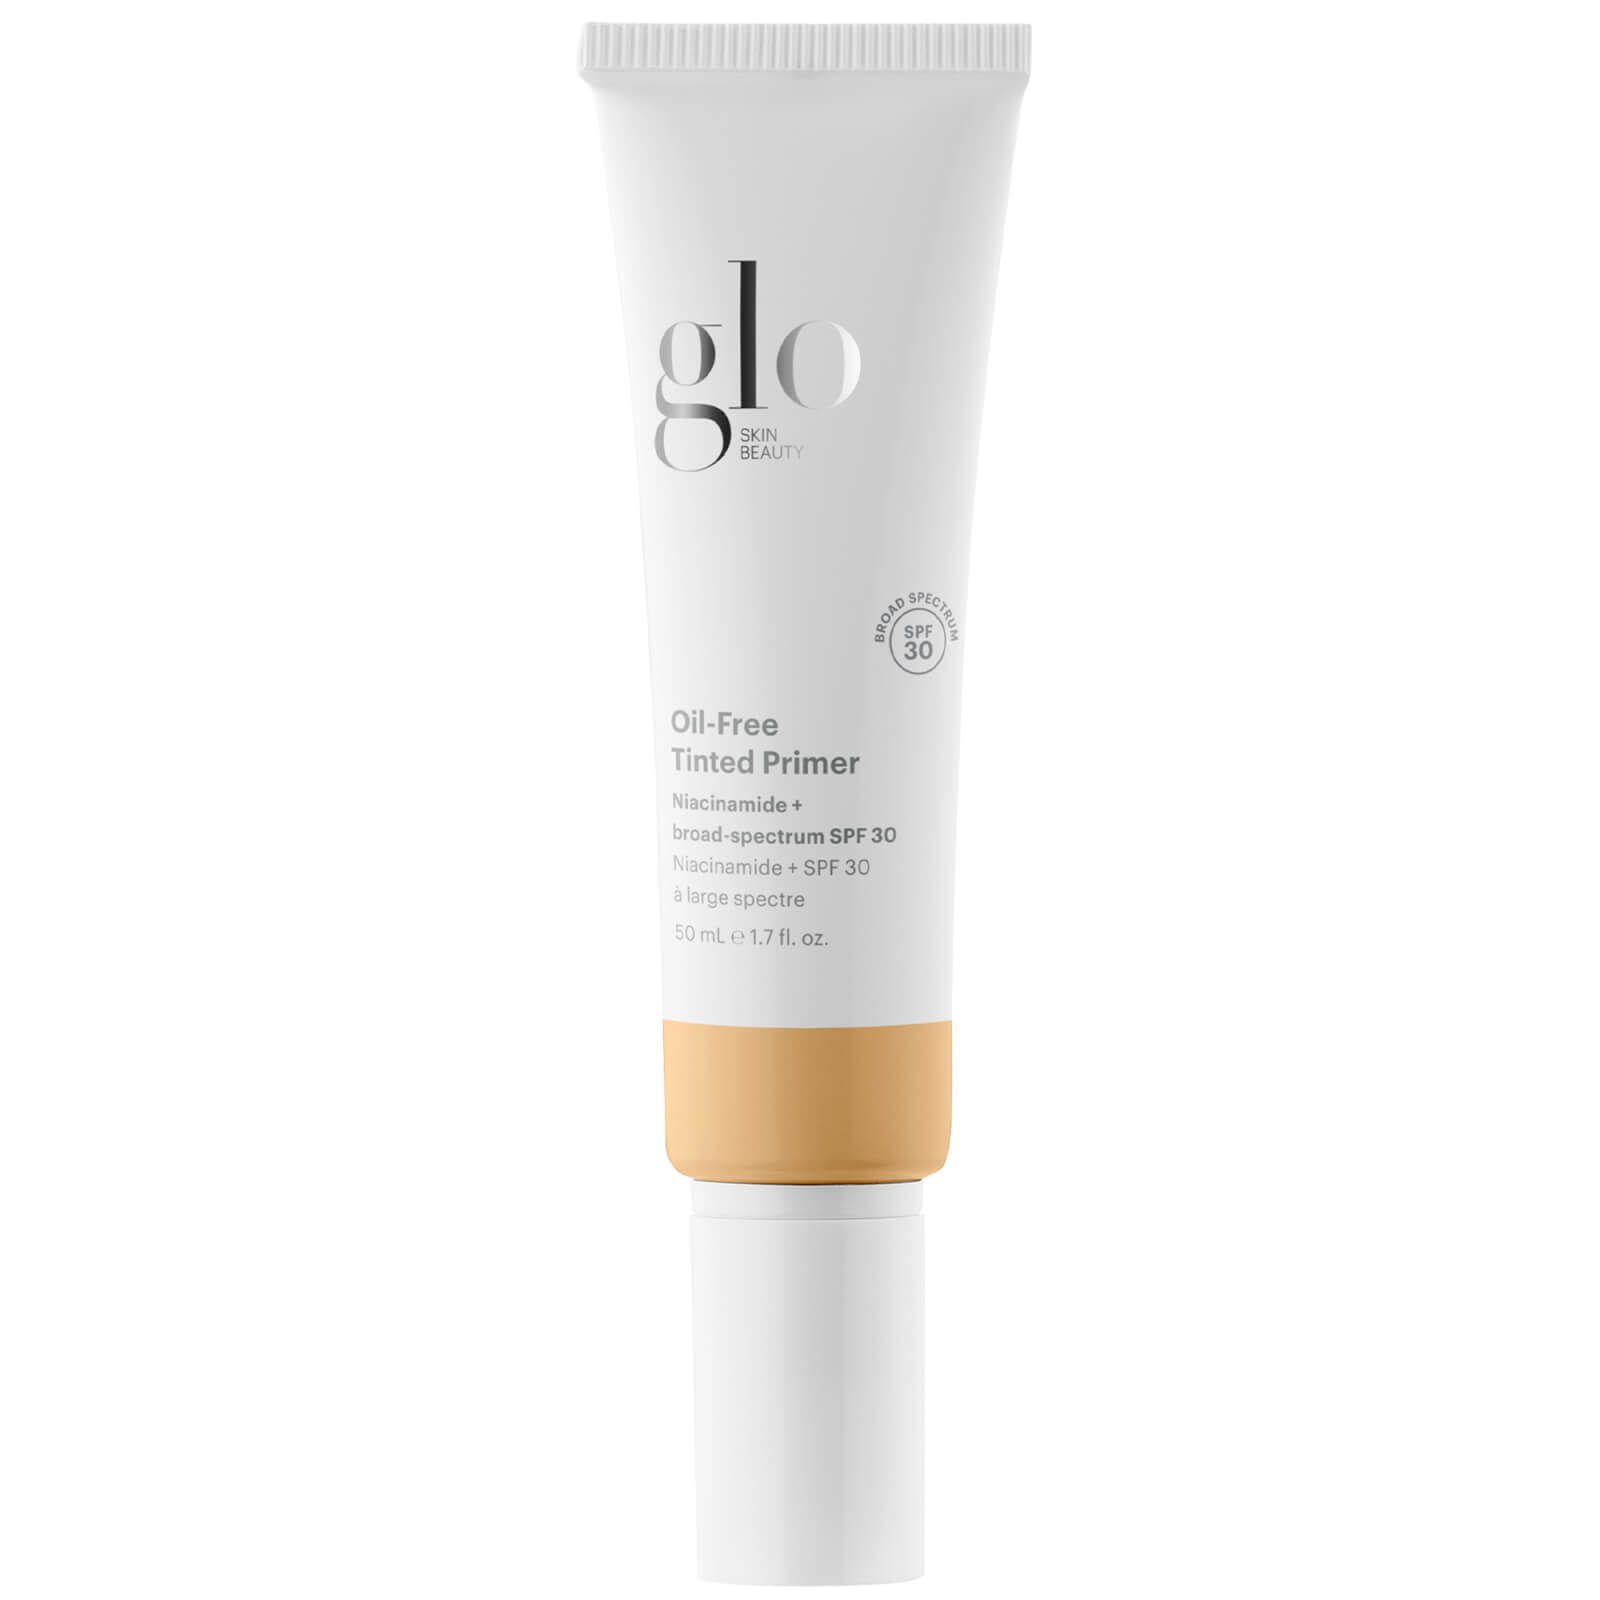 Glo Skin Beauty Oil-free Tinted Primer Spf 30 50ml (various Shades) In Light Medium